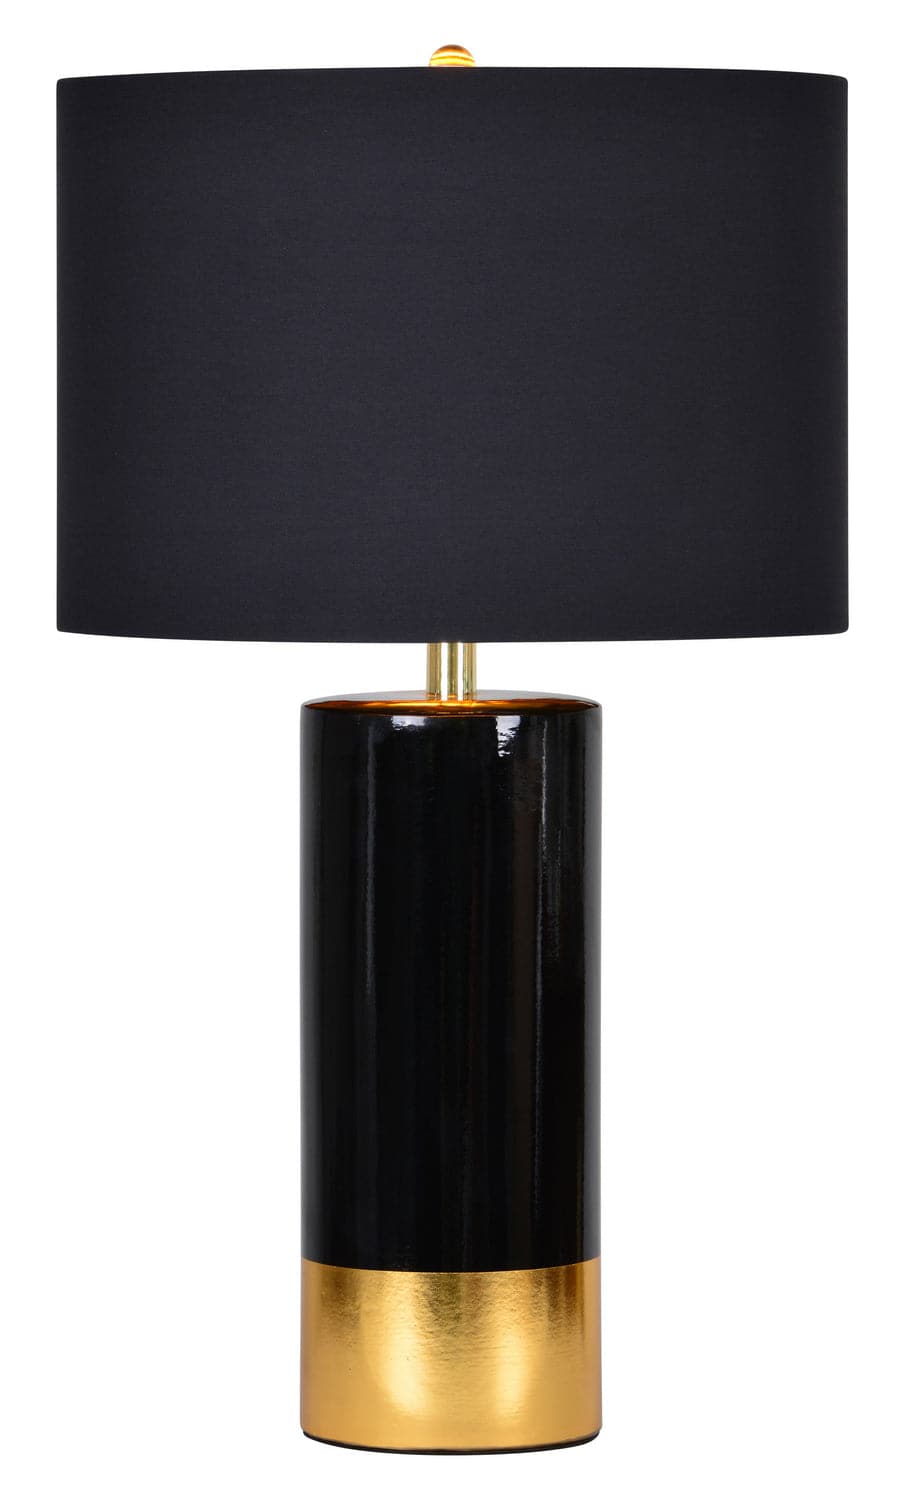 Renwil - LPT631 - One Light Table Lamp - The Tuxedo - Black/Gold